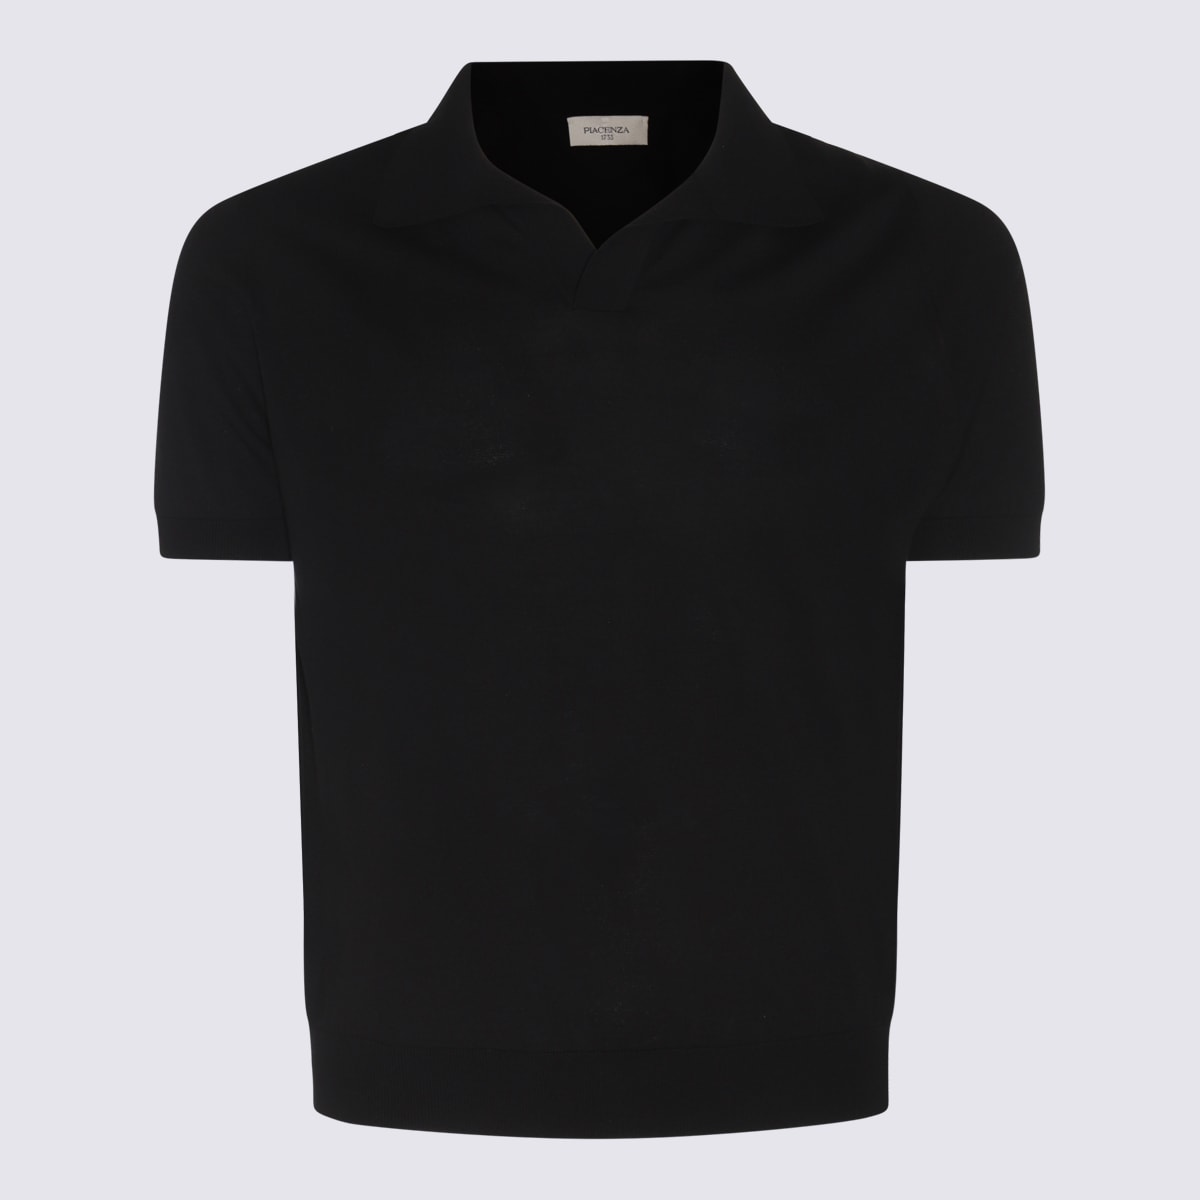 Shop Piacenza Cashmere Black Cotton Polo Shirt